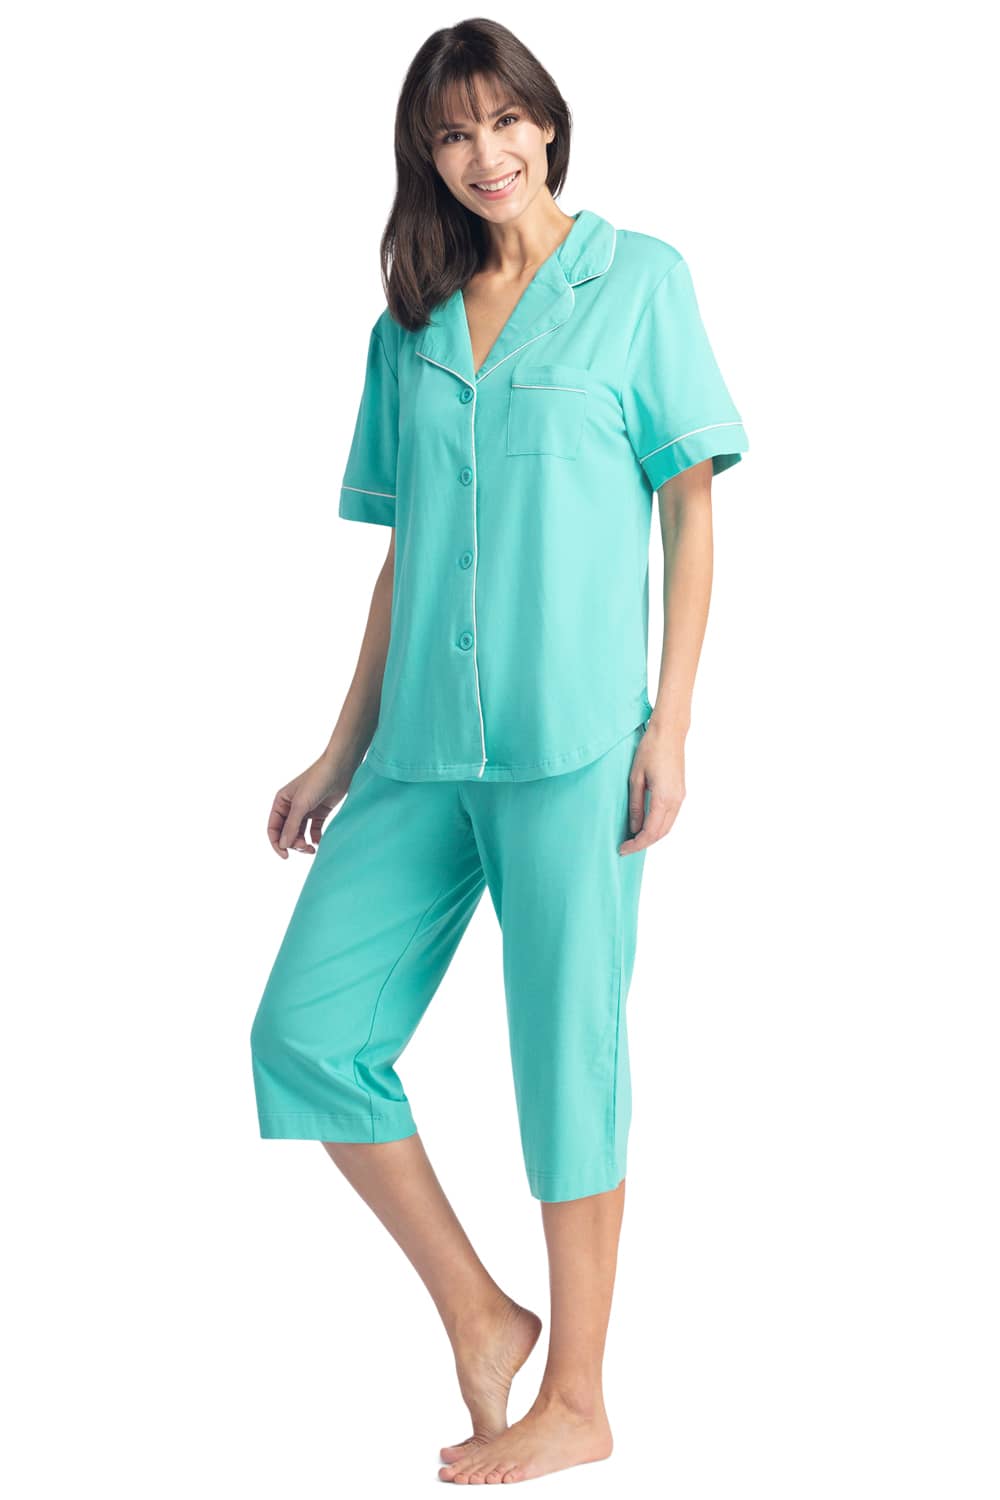 Hudhud - Women's Large Size Viscon Water Green Capri Pajama Set